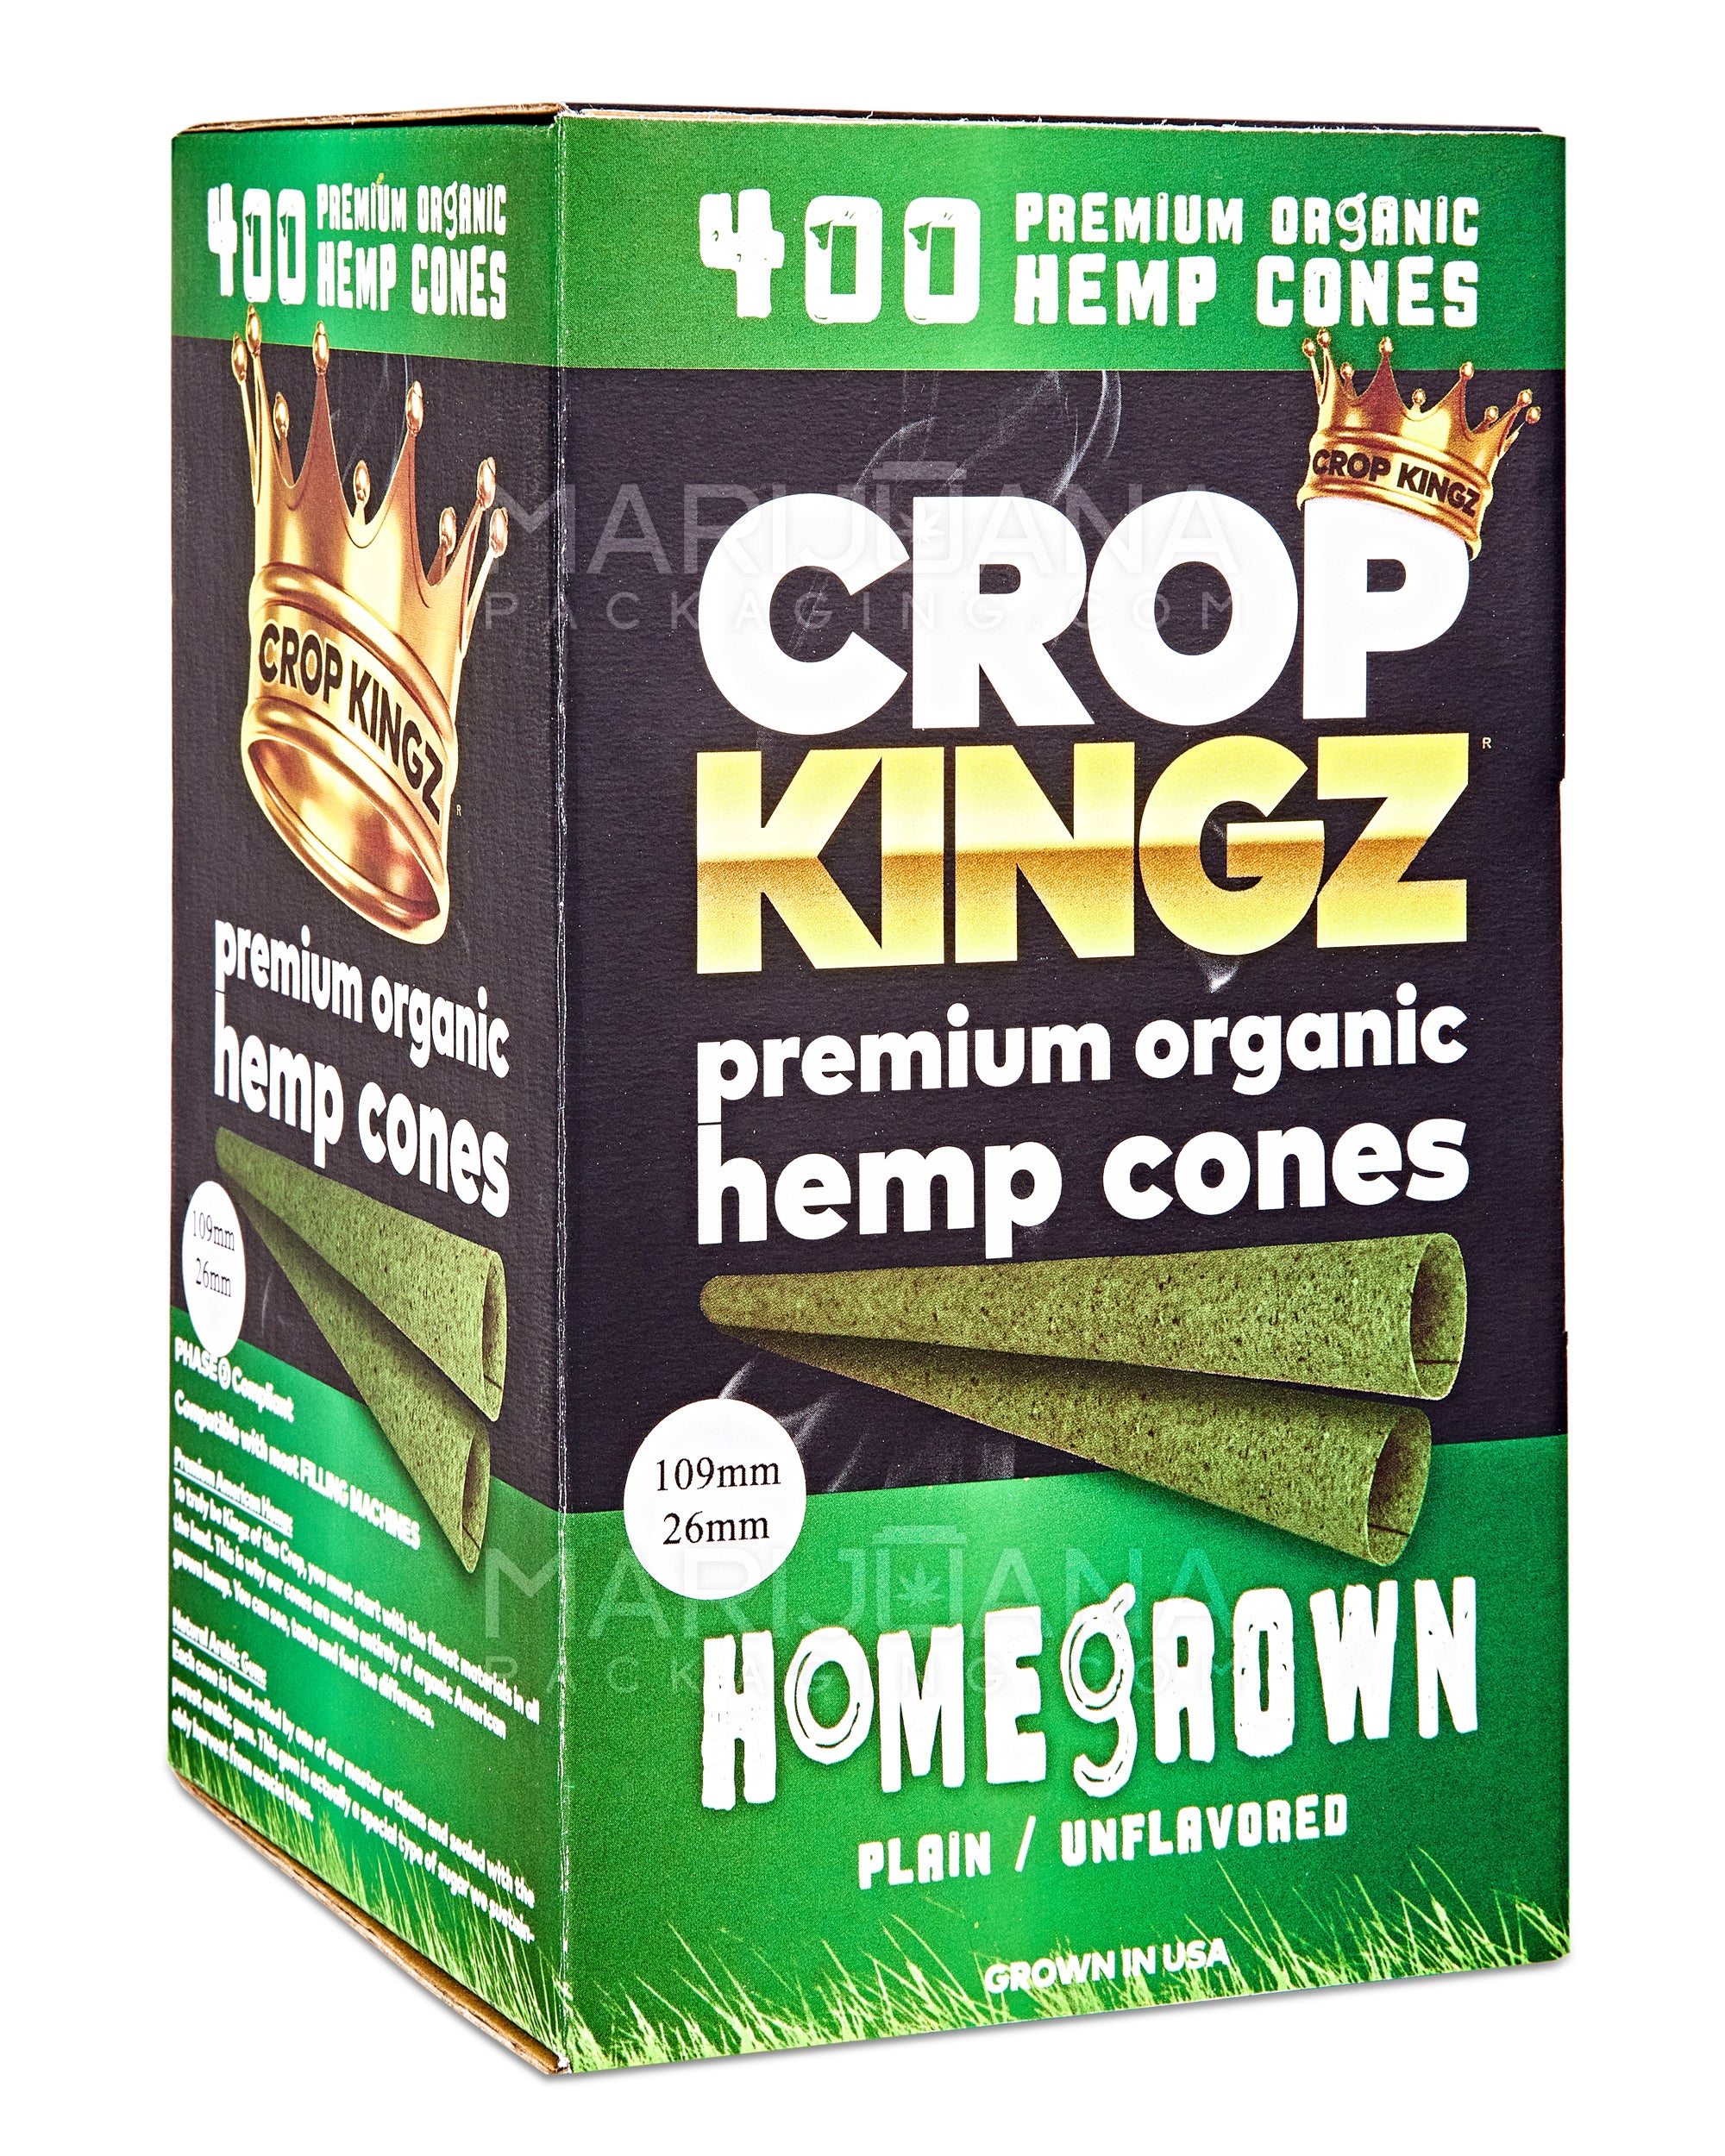 CROP KINGZ | King Size Premium Organic Hemp Cones | 109mm - Hemp Paper - 400 Count - 1